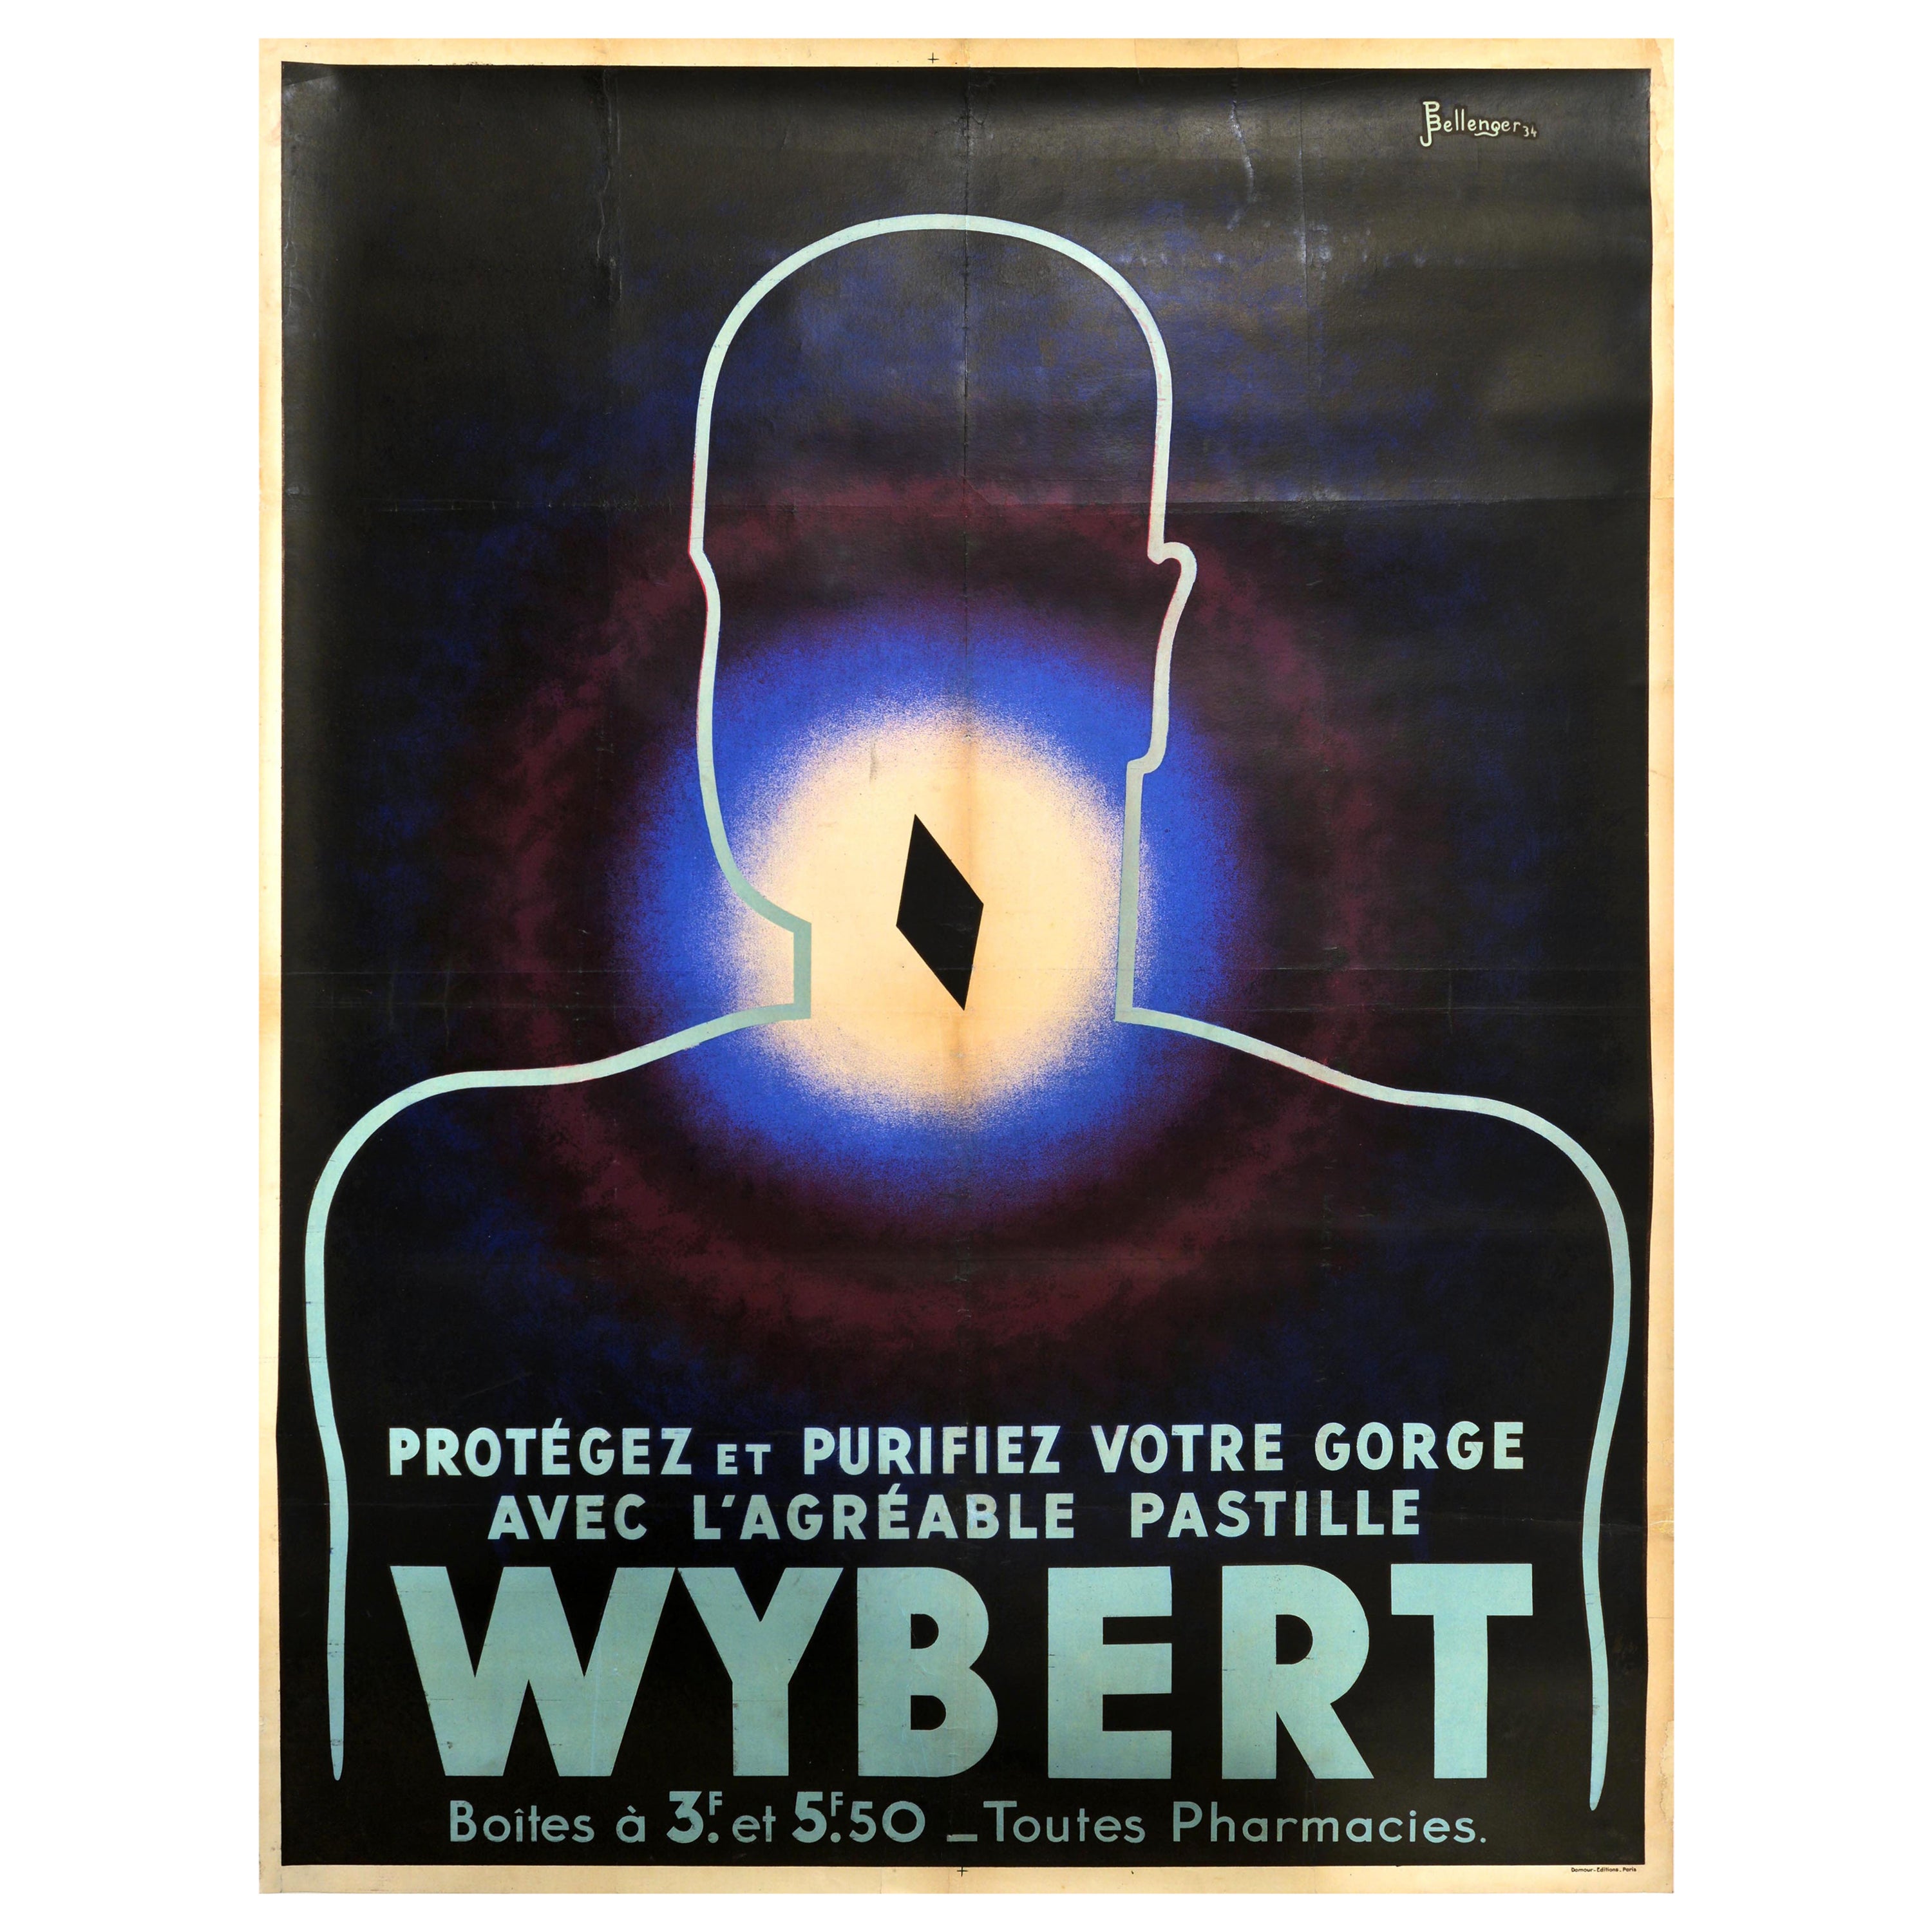 Original Vintage Health Medication-Poster Wybert, Art déco, Throat Lozenge, Design